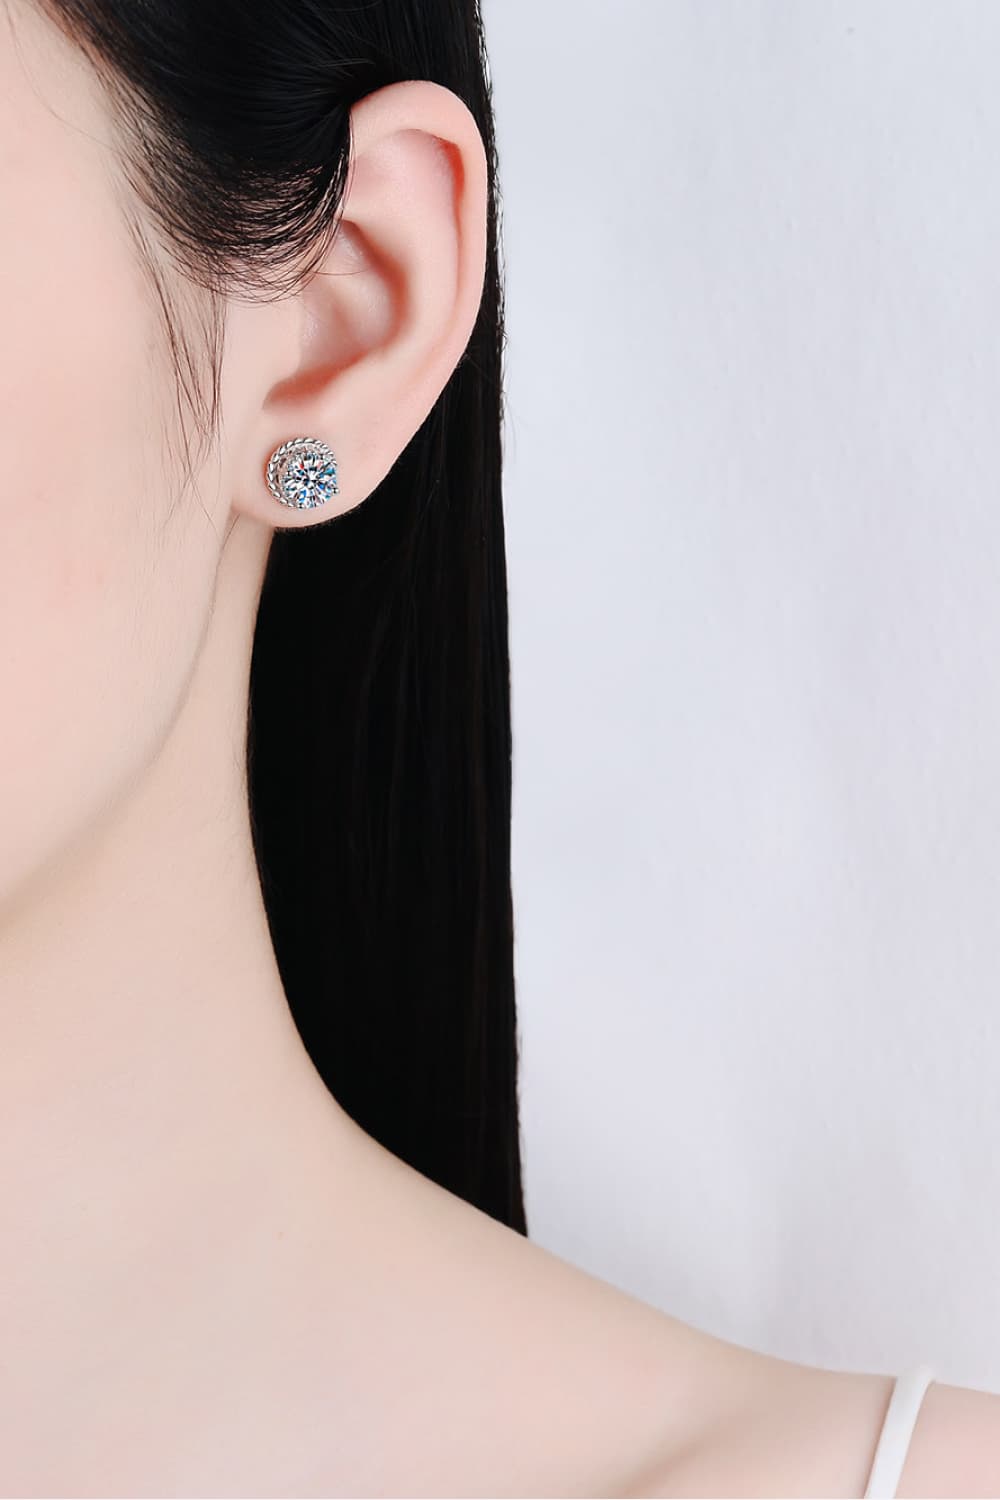 2 Carat Moissanite 925 Sterling Silver Stud Earrings - Uylee's Boutique